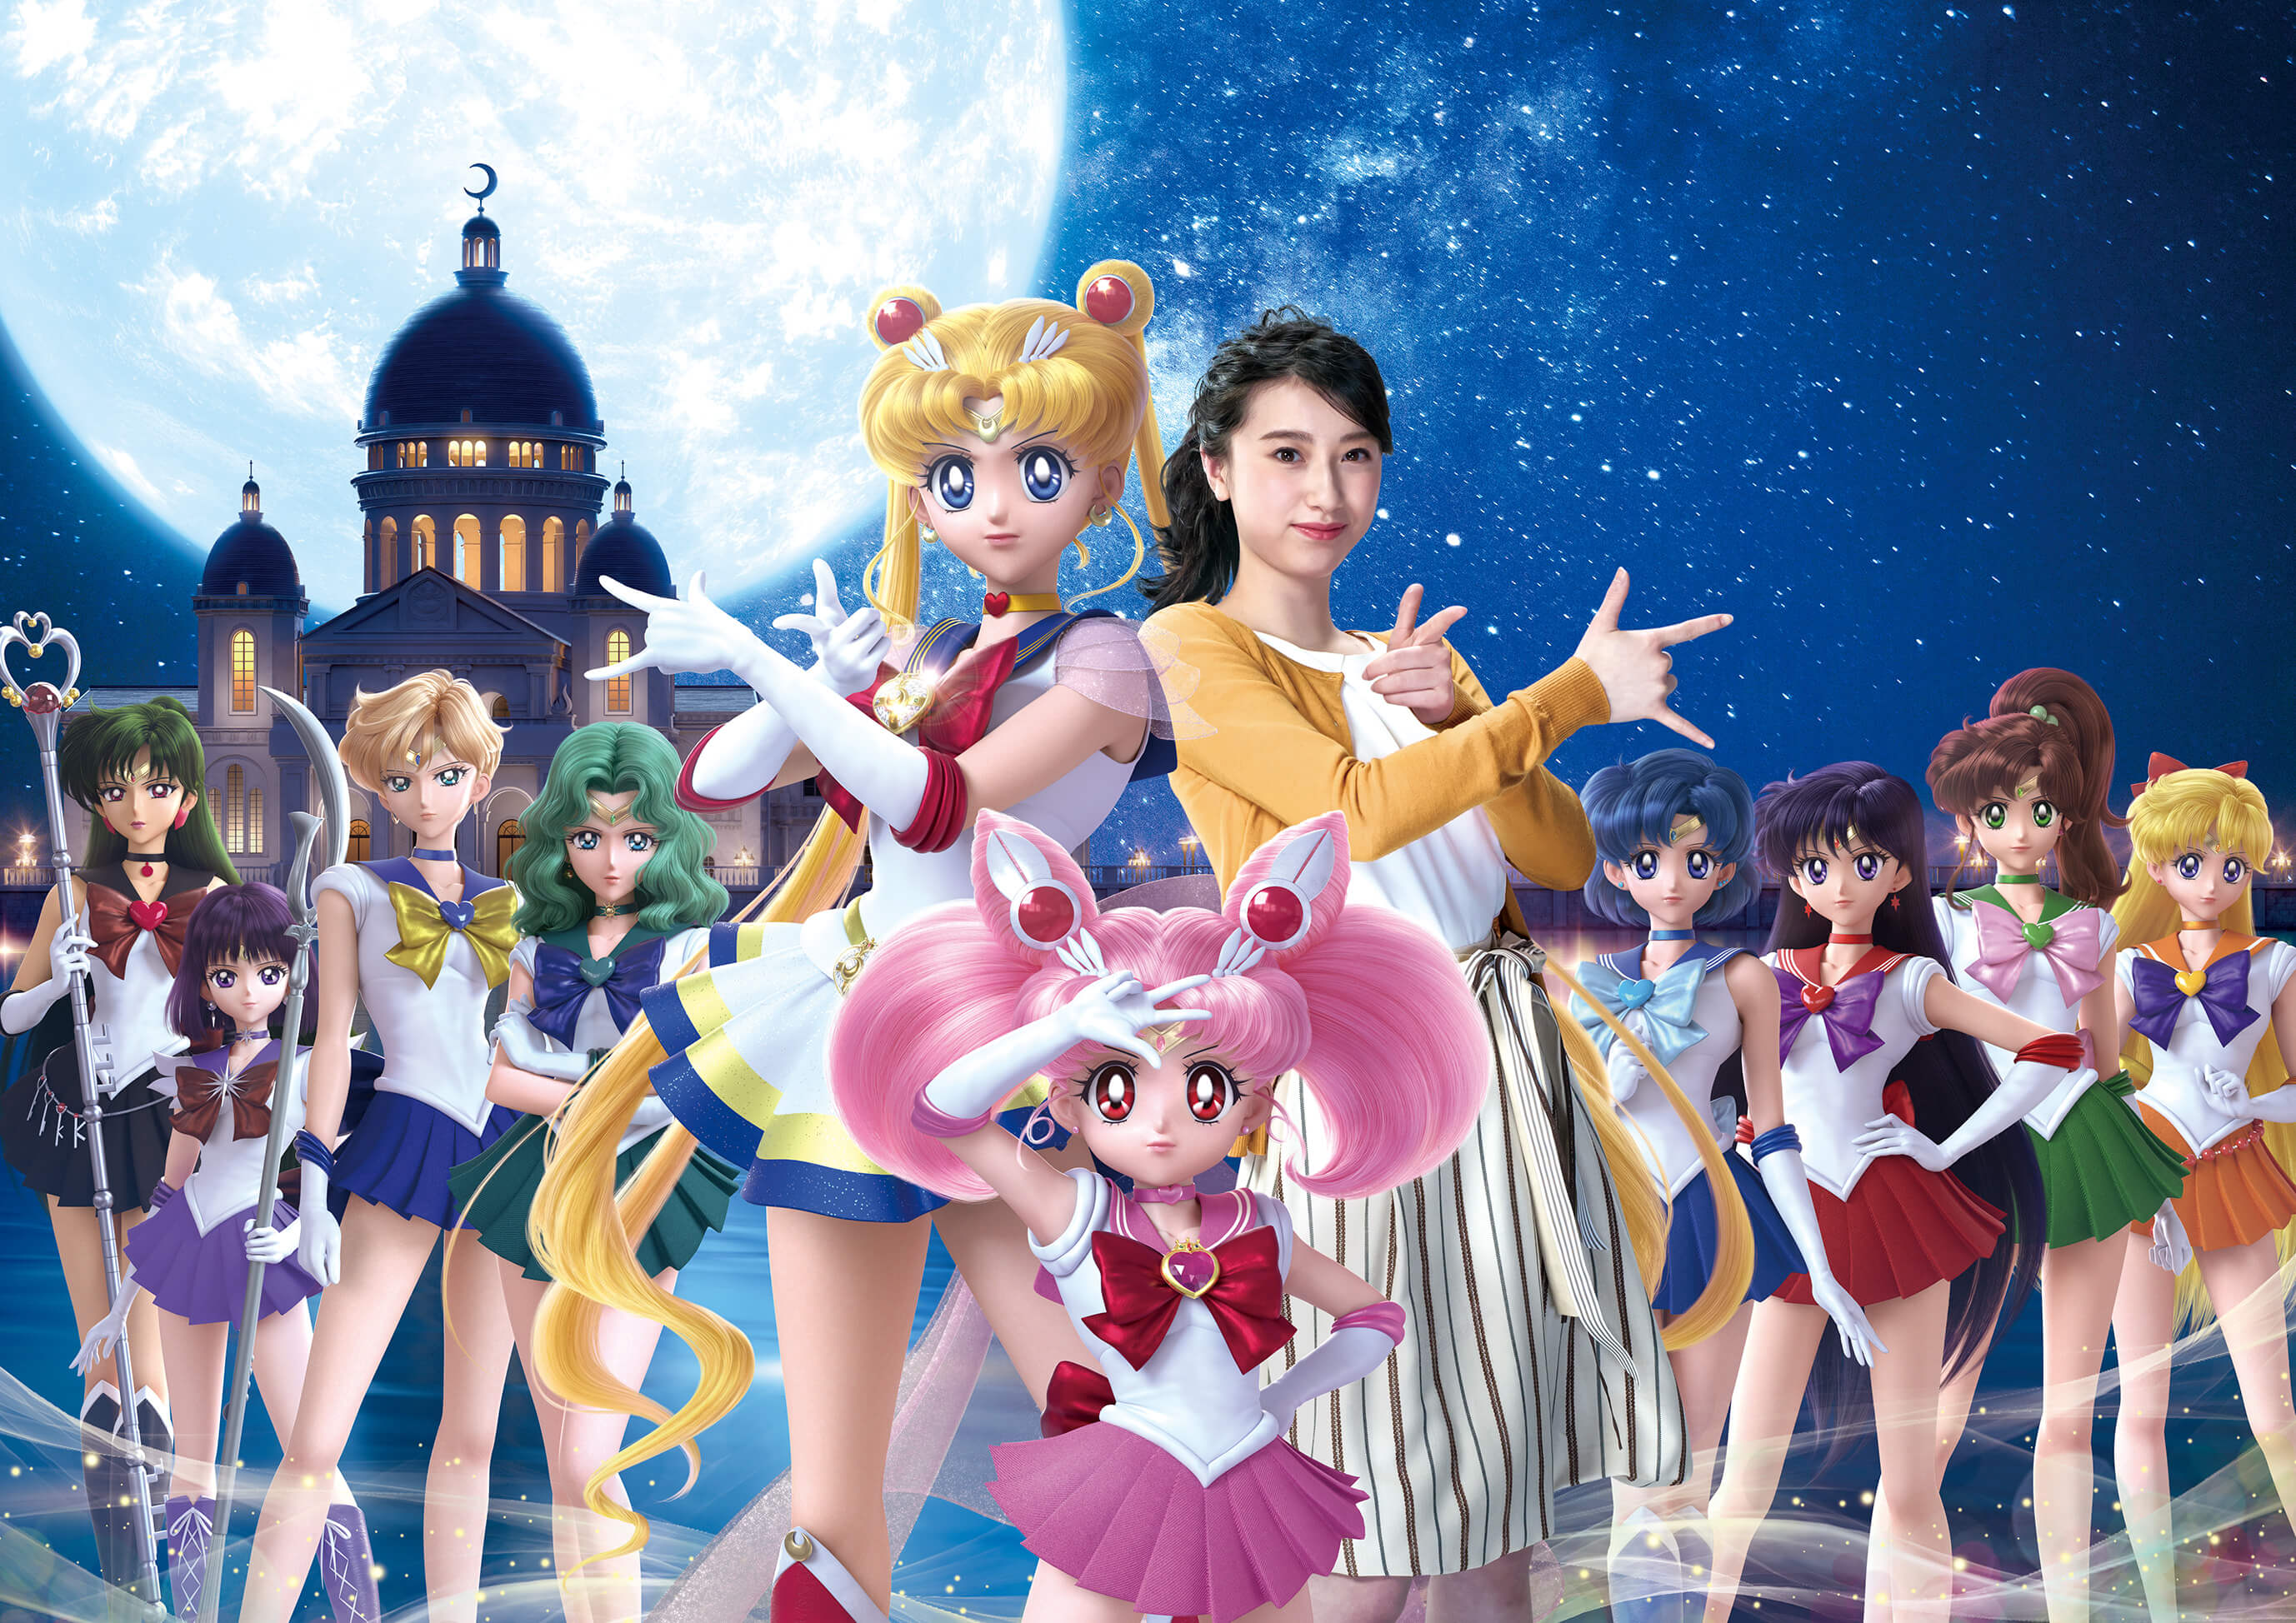 sailor moon セーラームーン　ユニバーサルスタジオジャパン　クールジャパン　新アトラクション　universal studio japan cool japan new attractionmainsub8